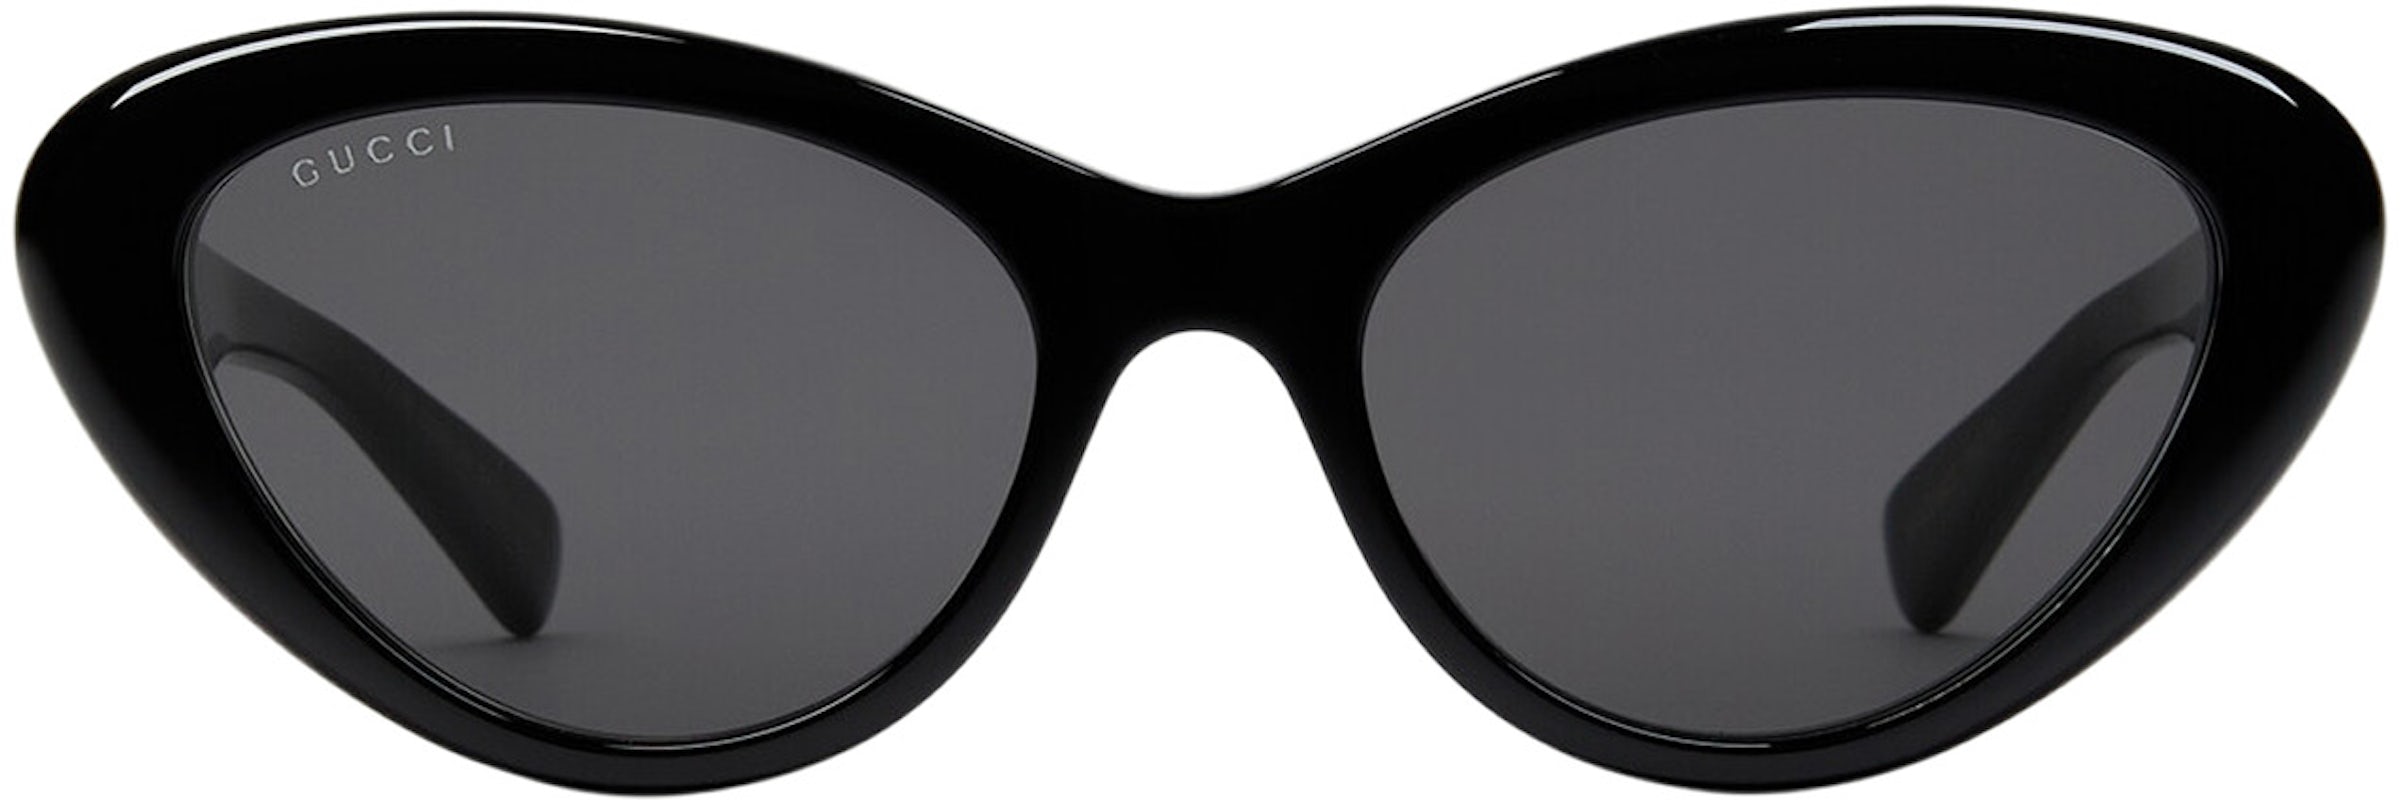 OFF-WHITE Catalina Rectangular Frame Sunglasses Black/Dark Grey/Gold  (OERI003Y21PLA0011007 / OERI003C99PLA0011007)